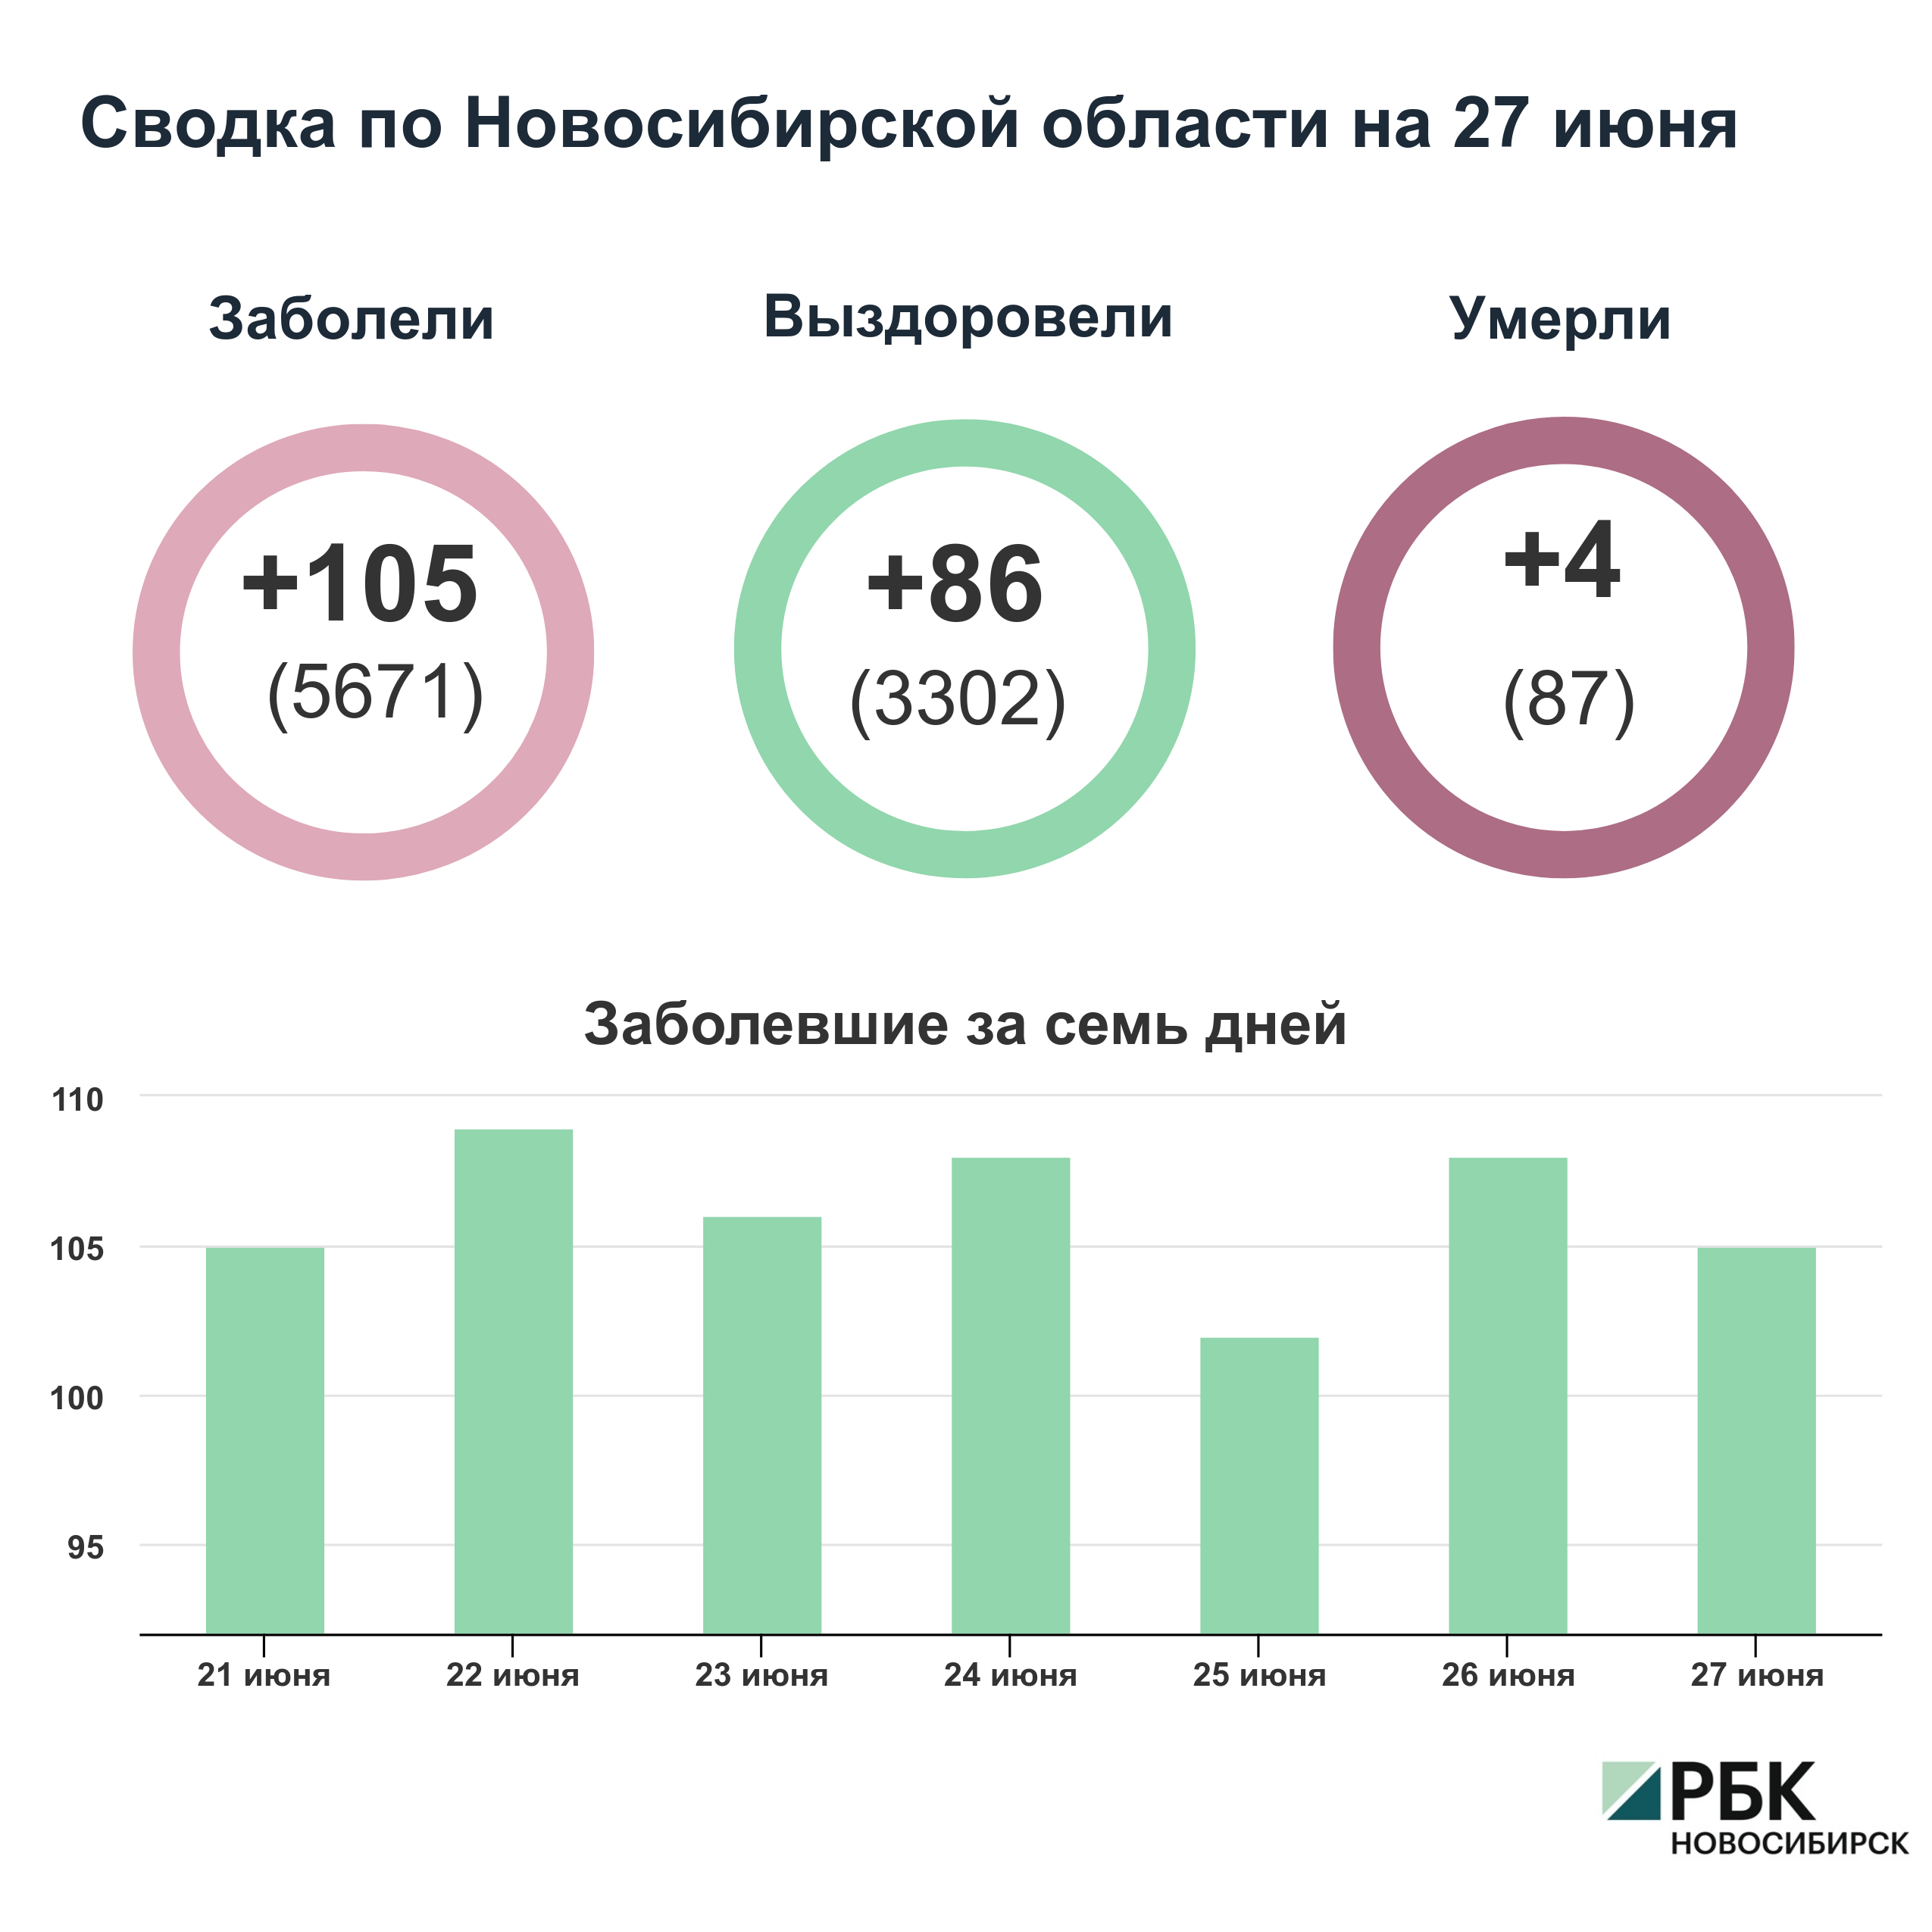 Коронавирус в Новосибирске: сводка на 27 июня